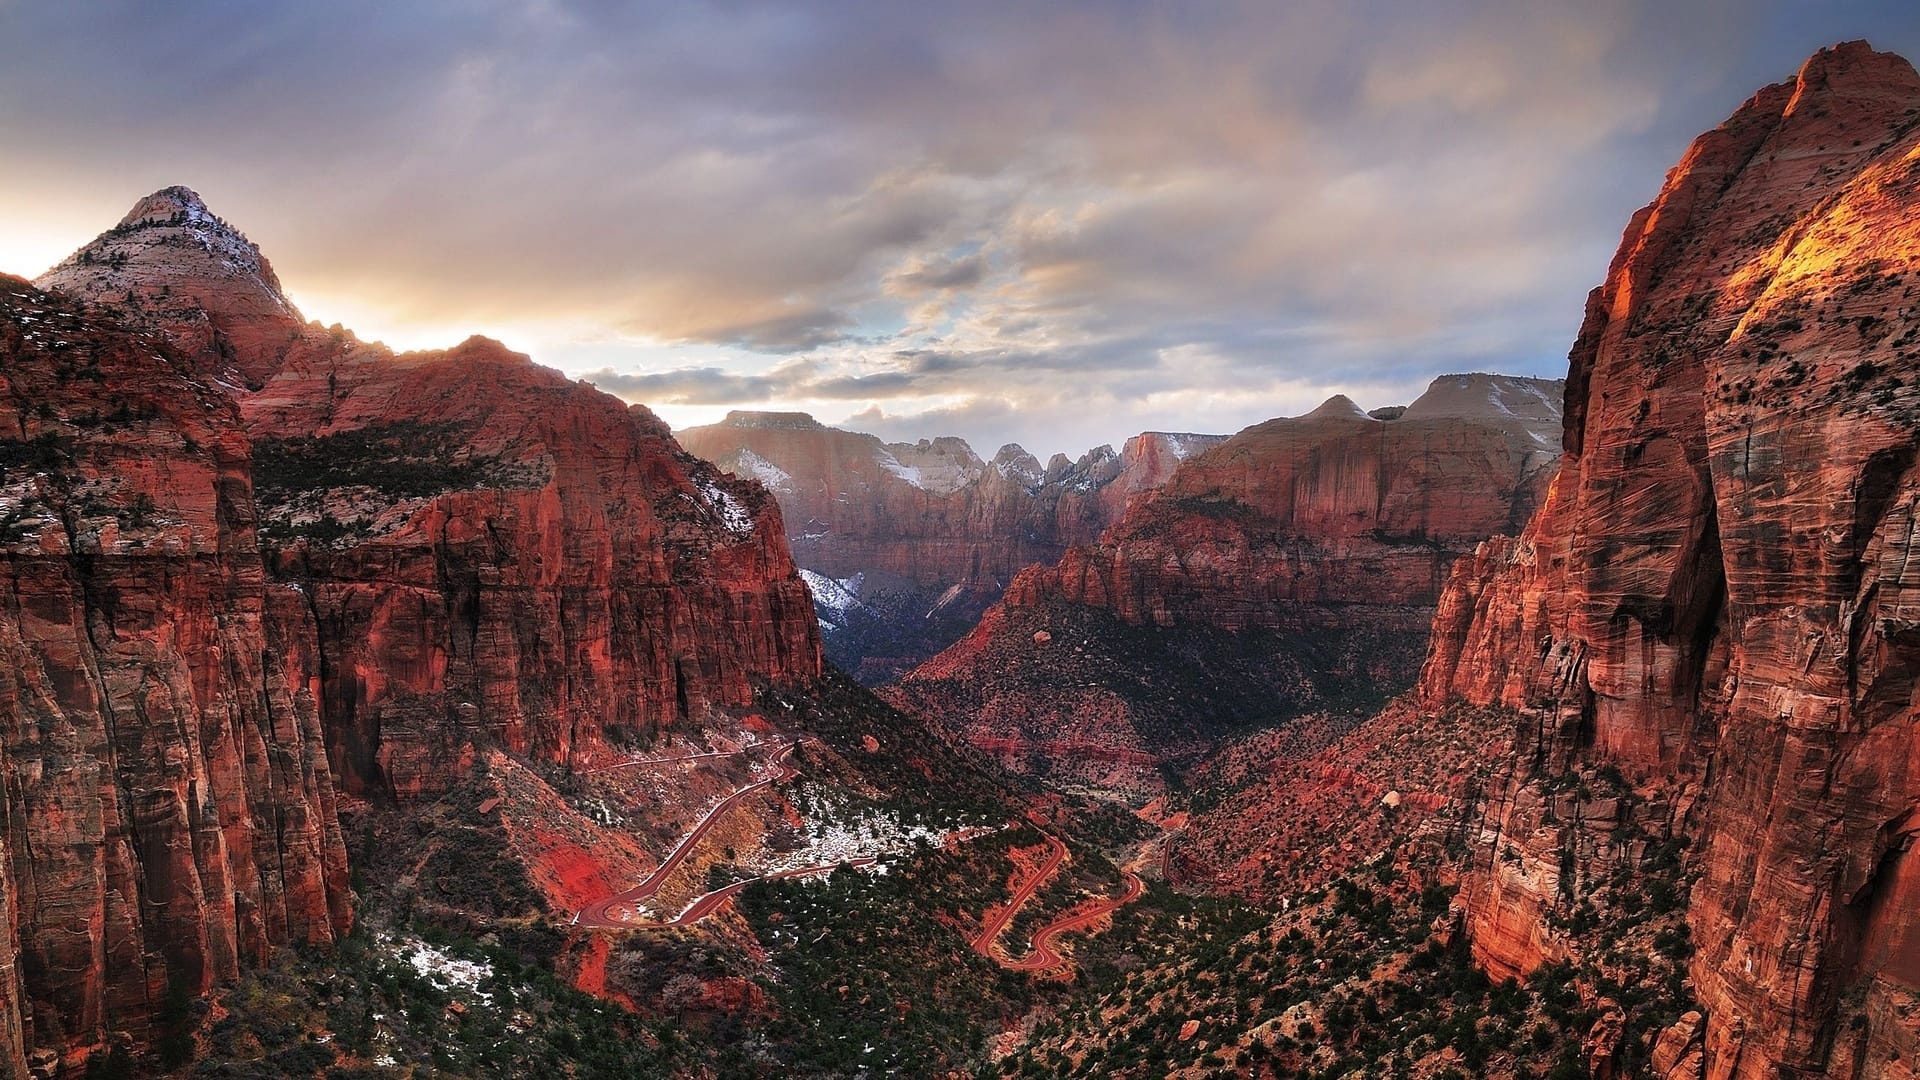 Zion National Park, Windows 10 theme, Natural wonders, Scenic beauty, 1920x1080 Full HD Desktop